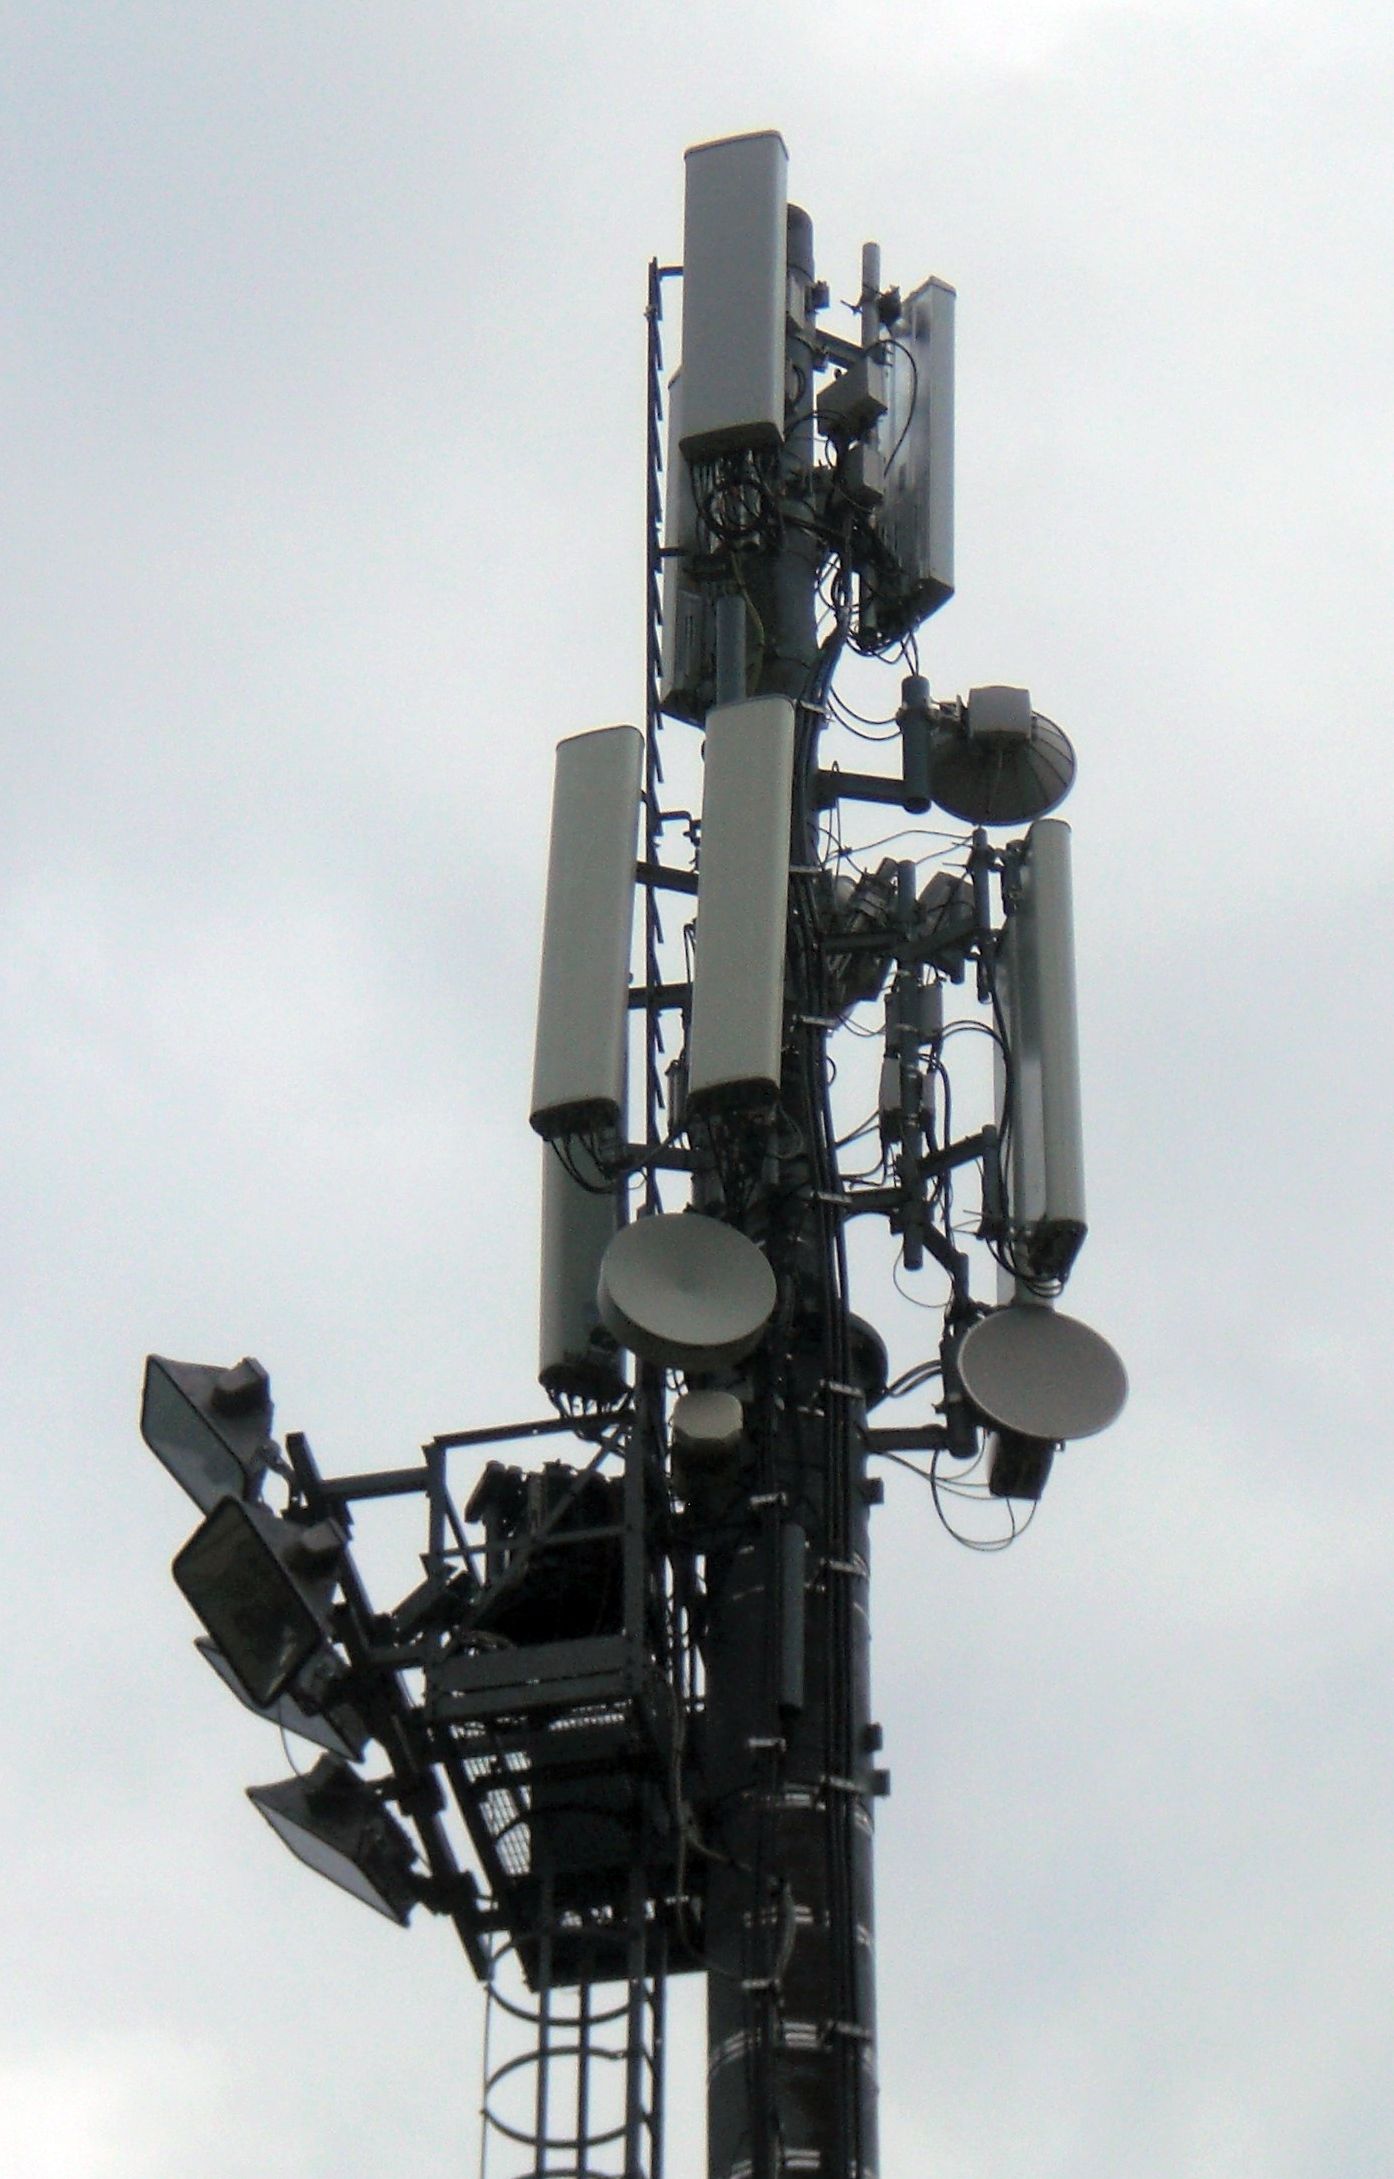 Die Antennen im Februar 2020. Foto Daniel Zanolli